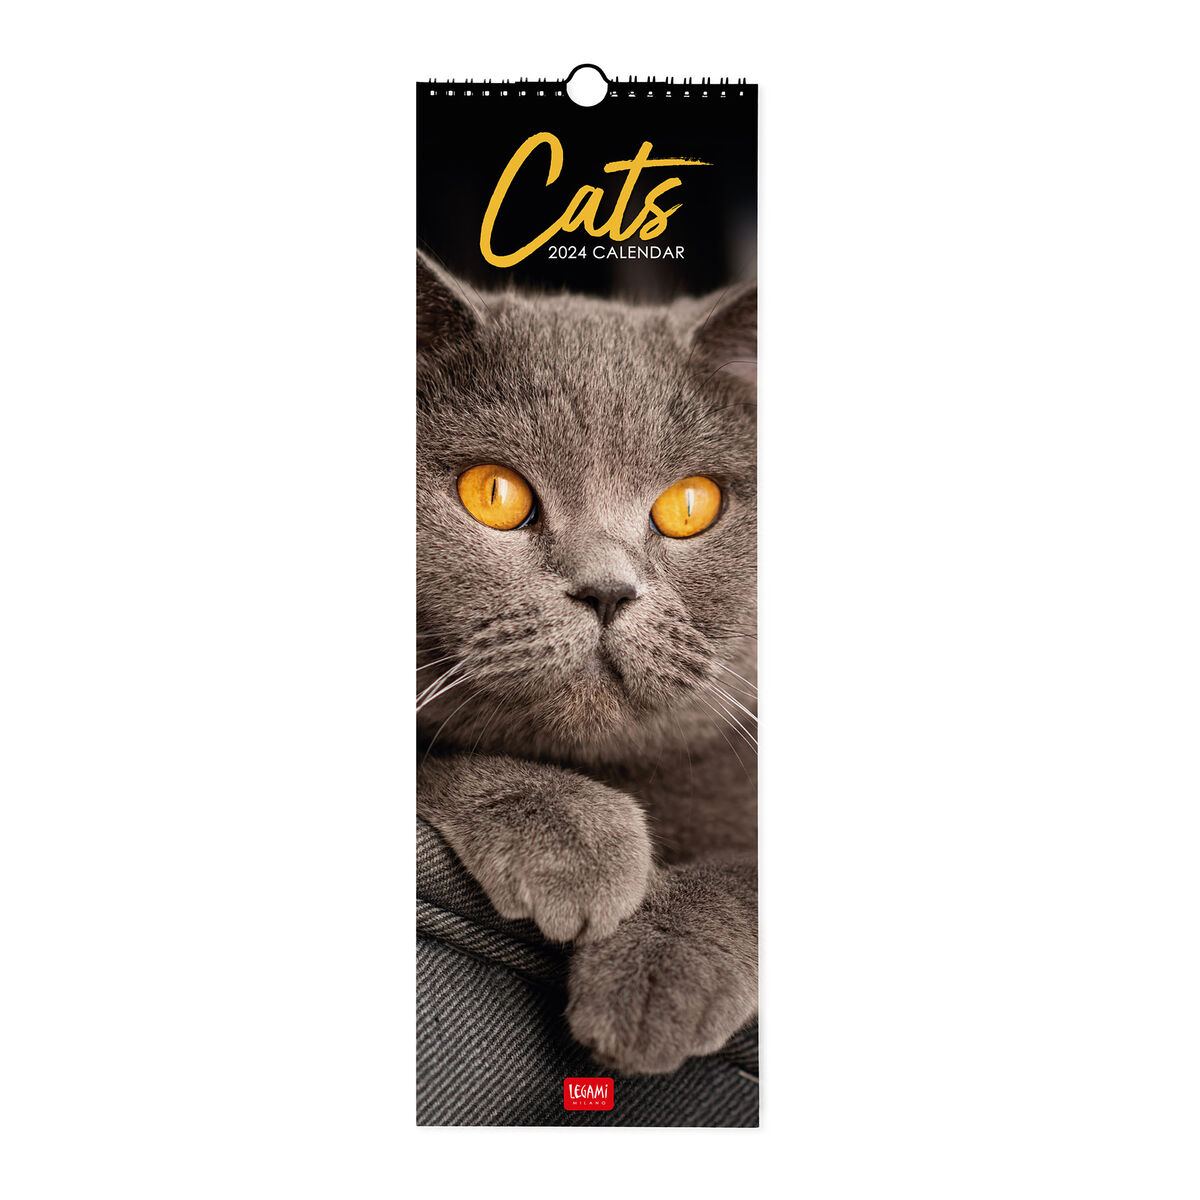 Calendario da Parete 2024 - 16 x 49 Cm SWEET CATS